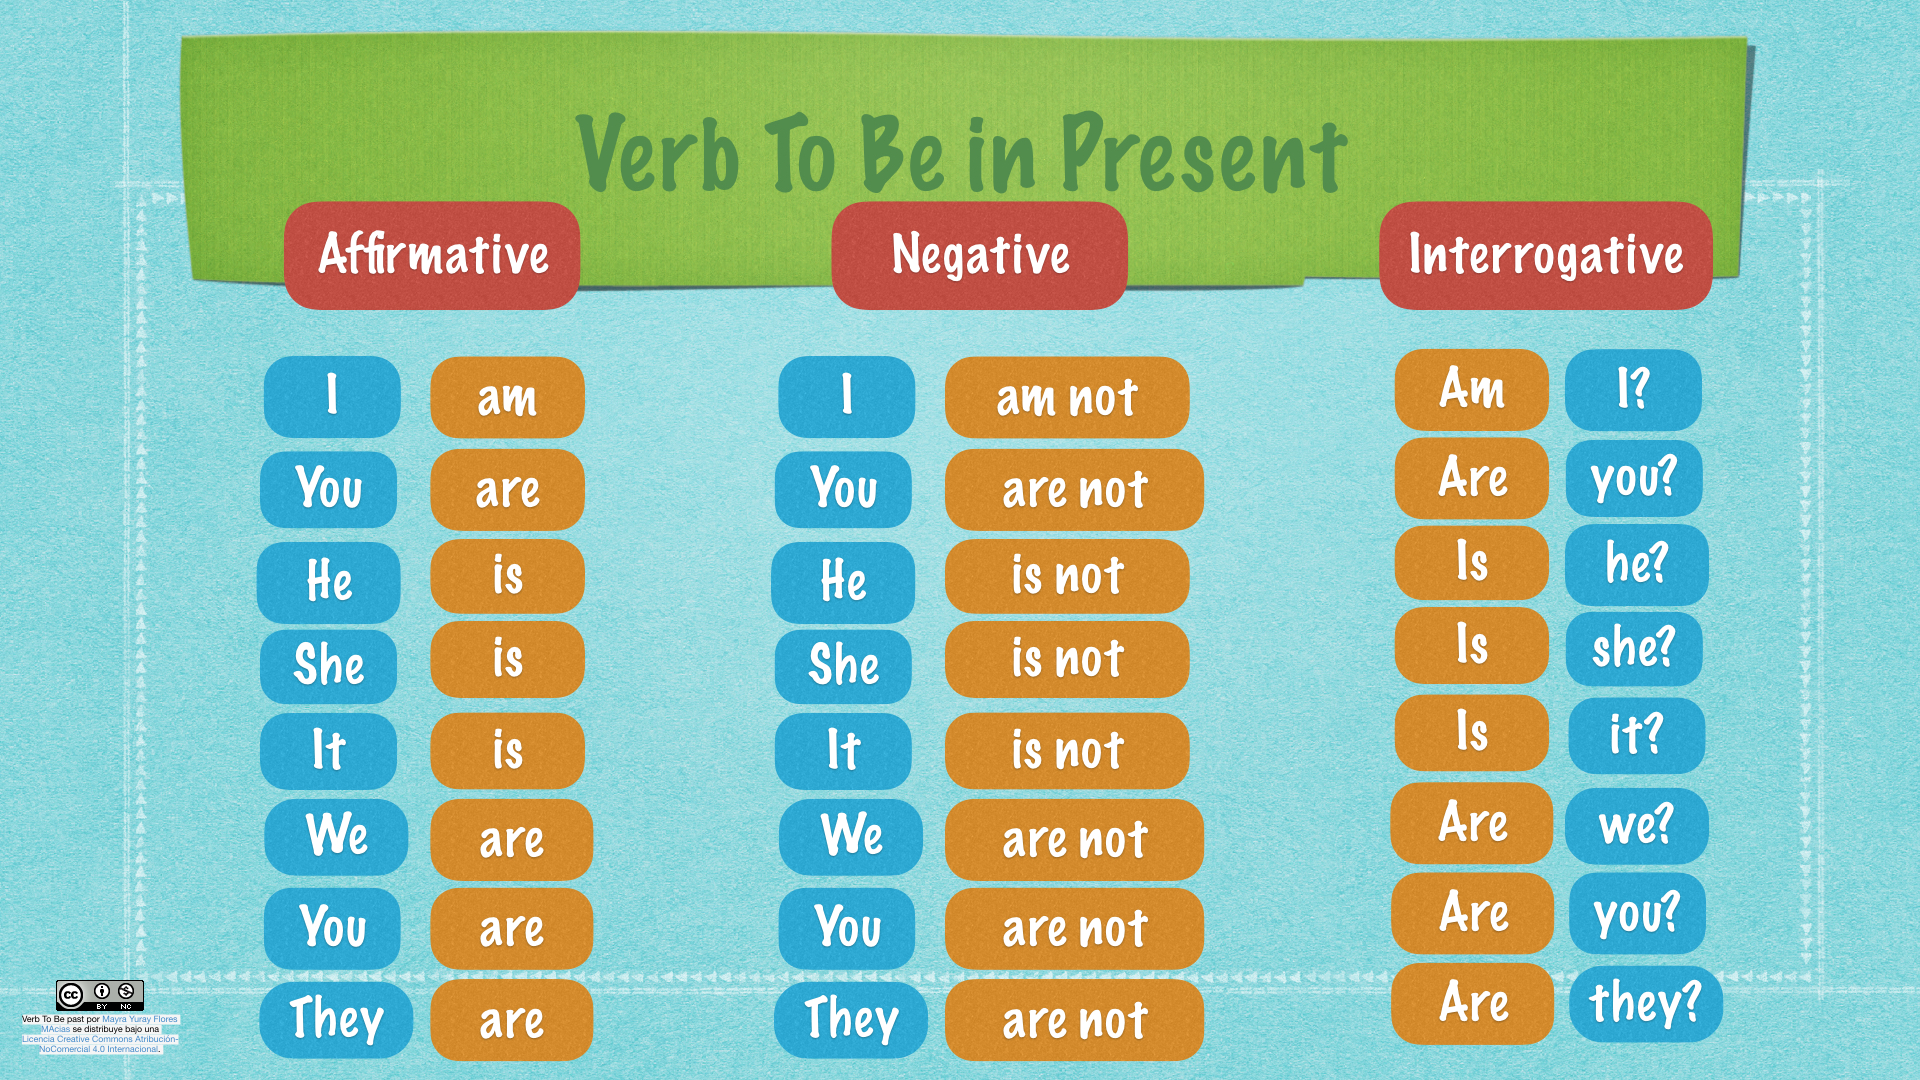 verb-to-be-present-englishlanguage4u